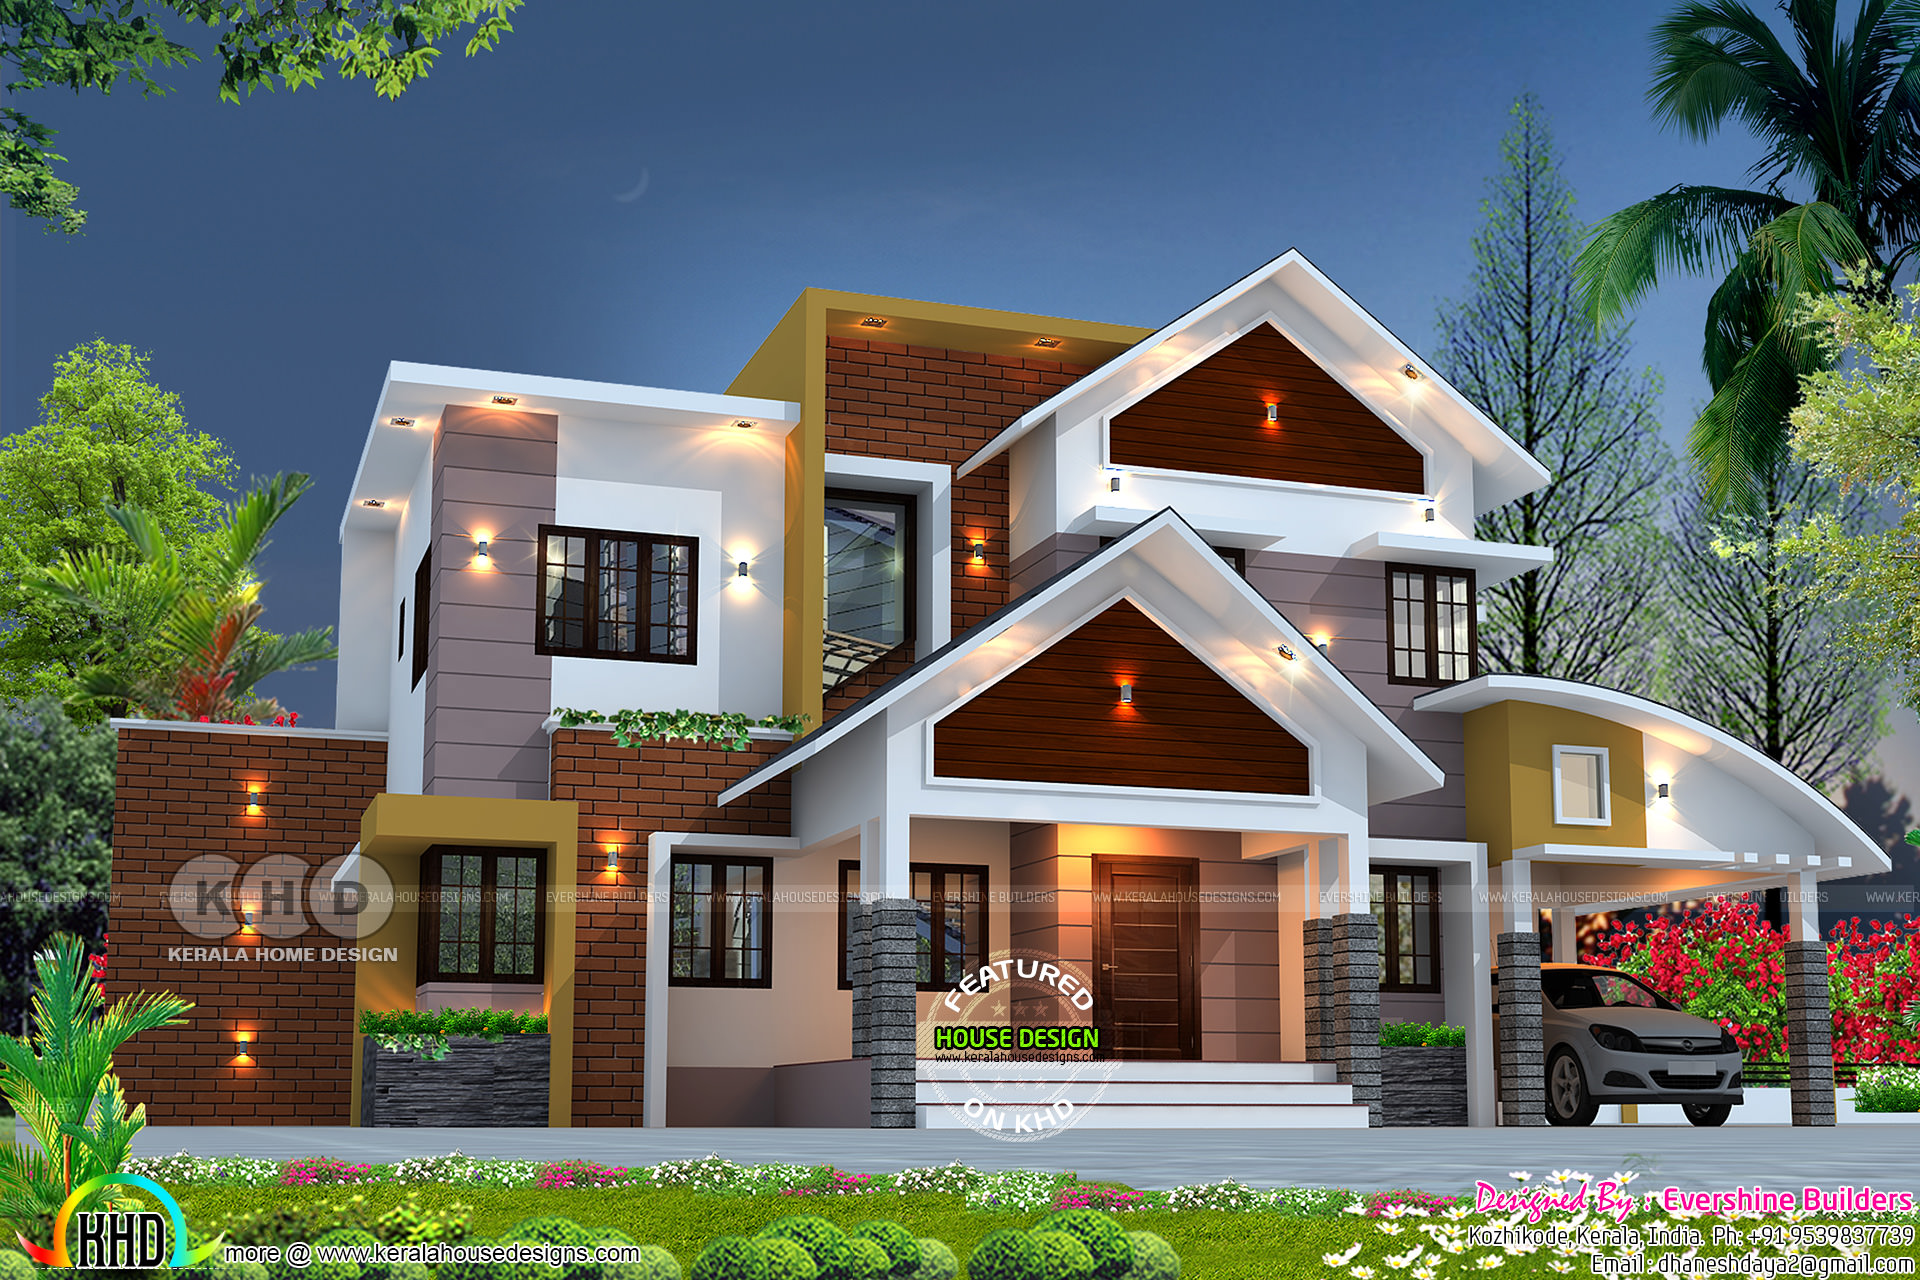 4 Bedroom Modern Mixed Roof Home Kerala House Design